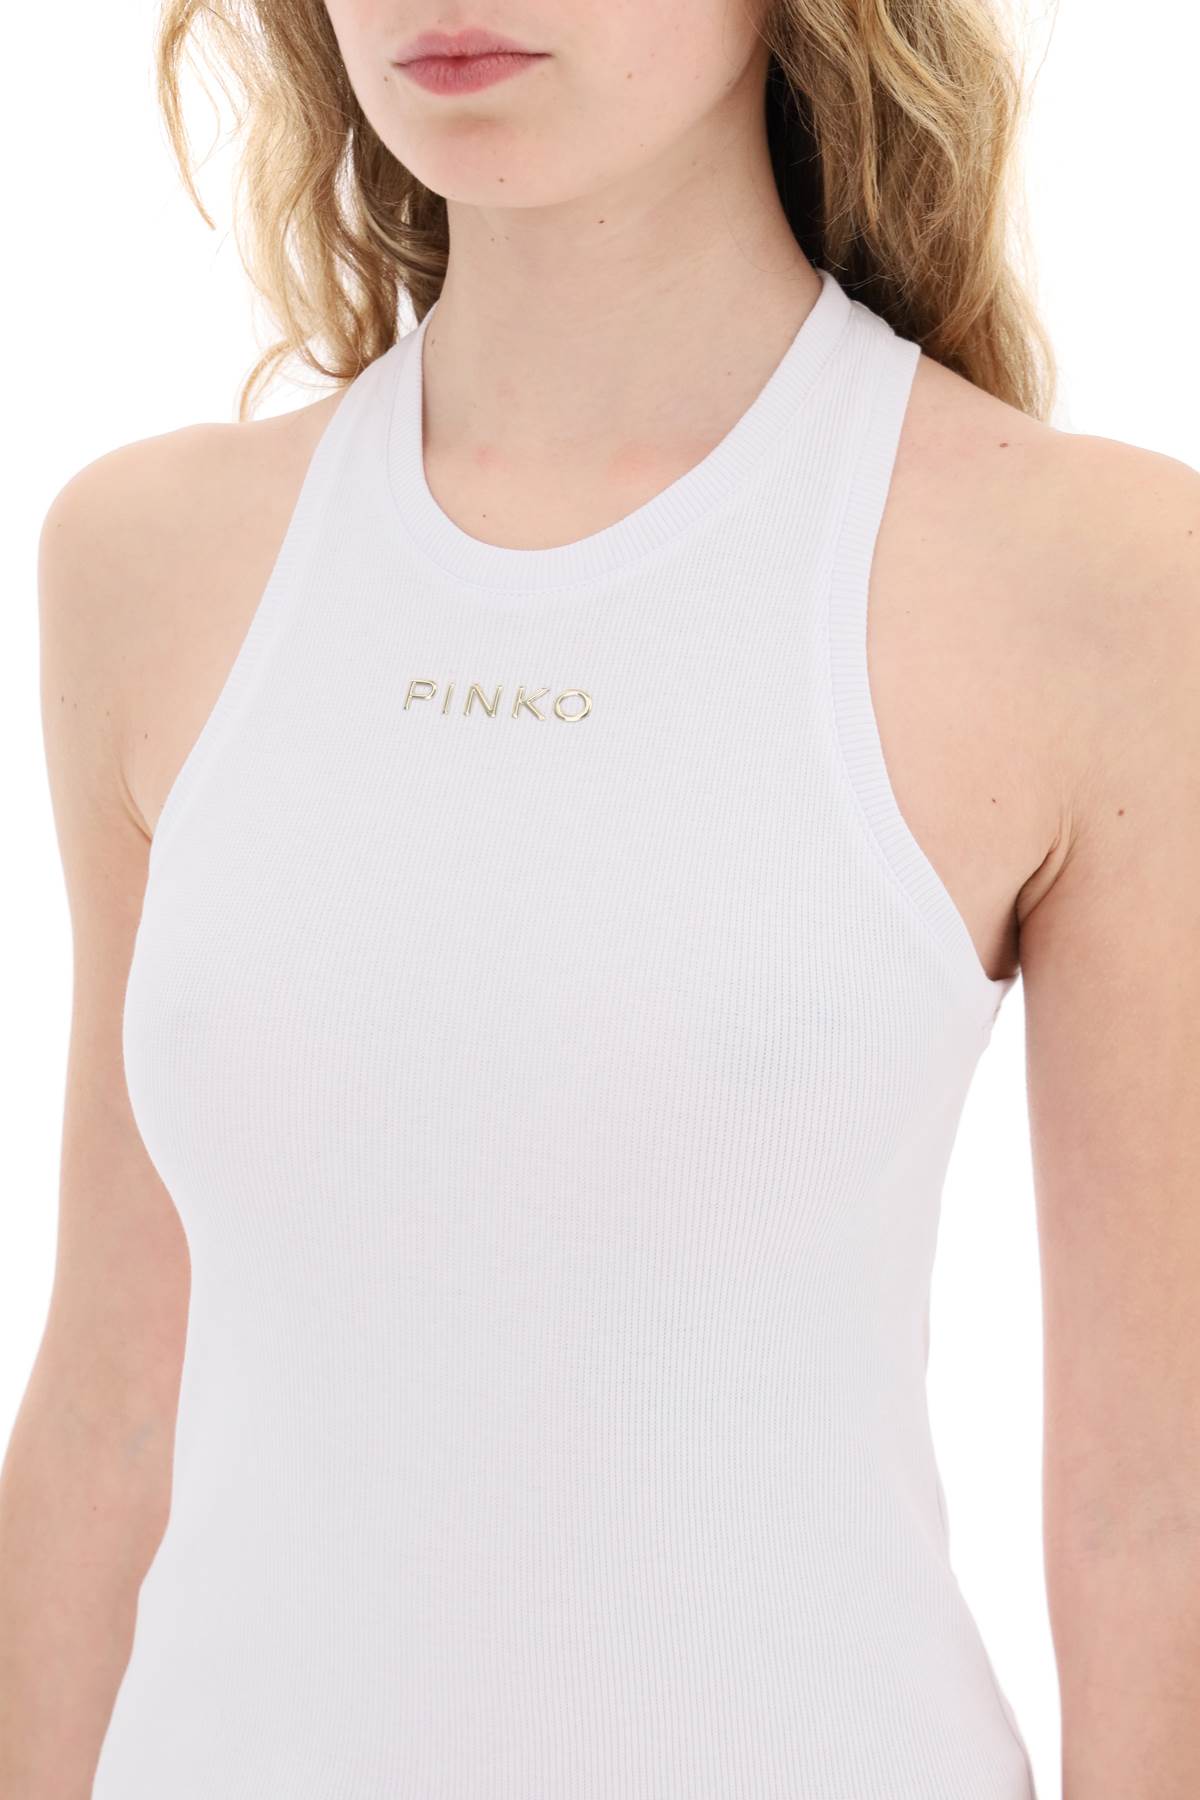 Pinko sleeveless top with-3